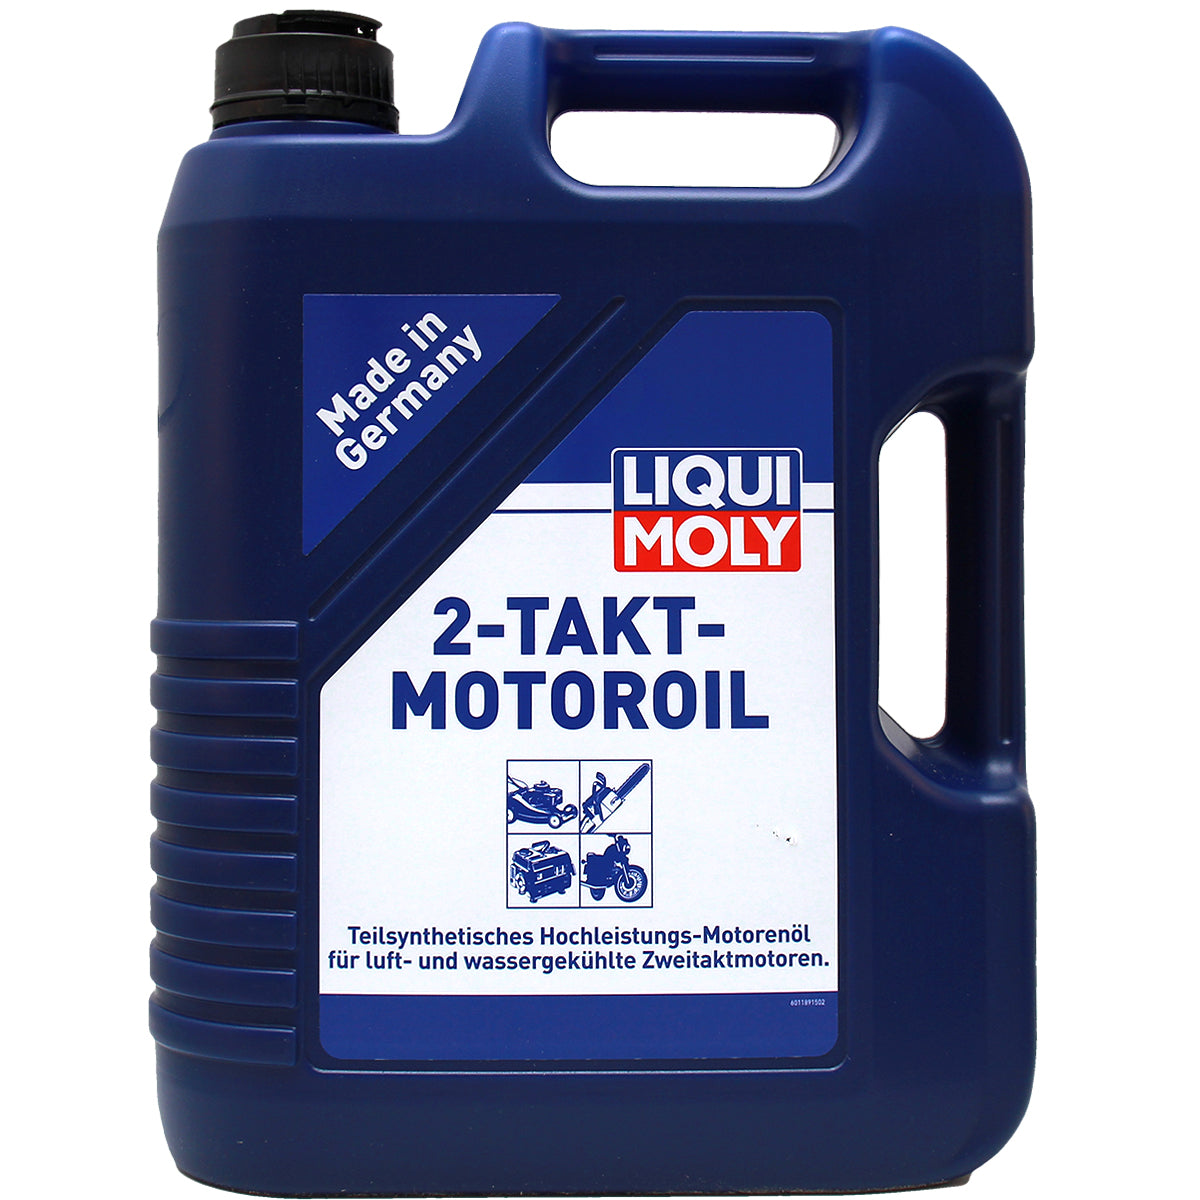 Liqui Moly 2-Takt-Motoroil 5 Liter – oel-billiger